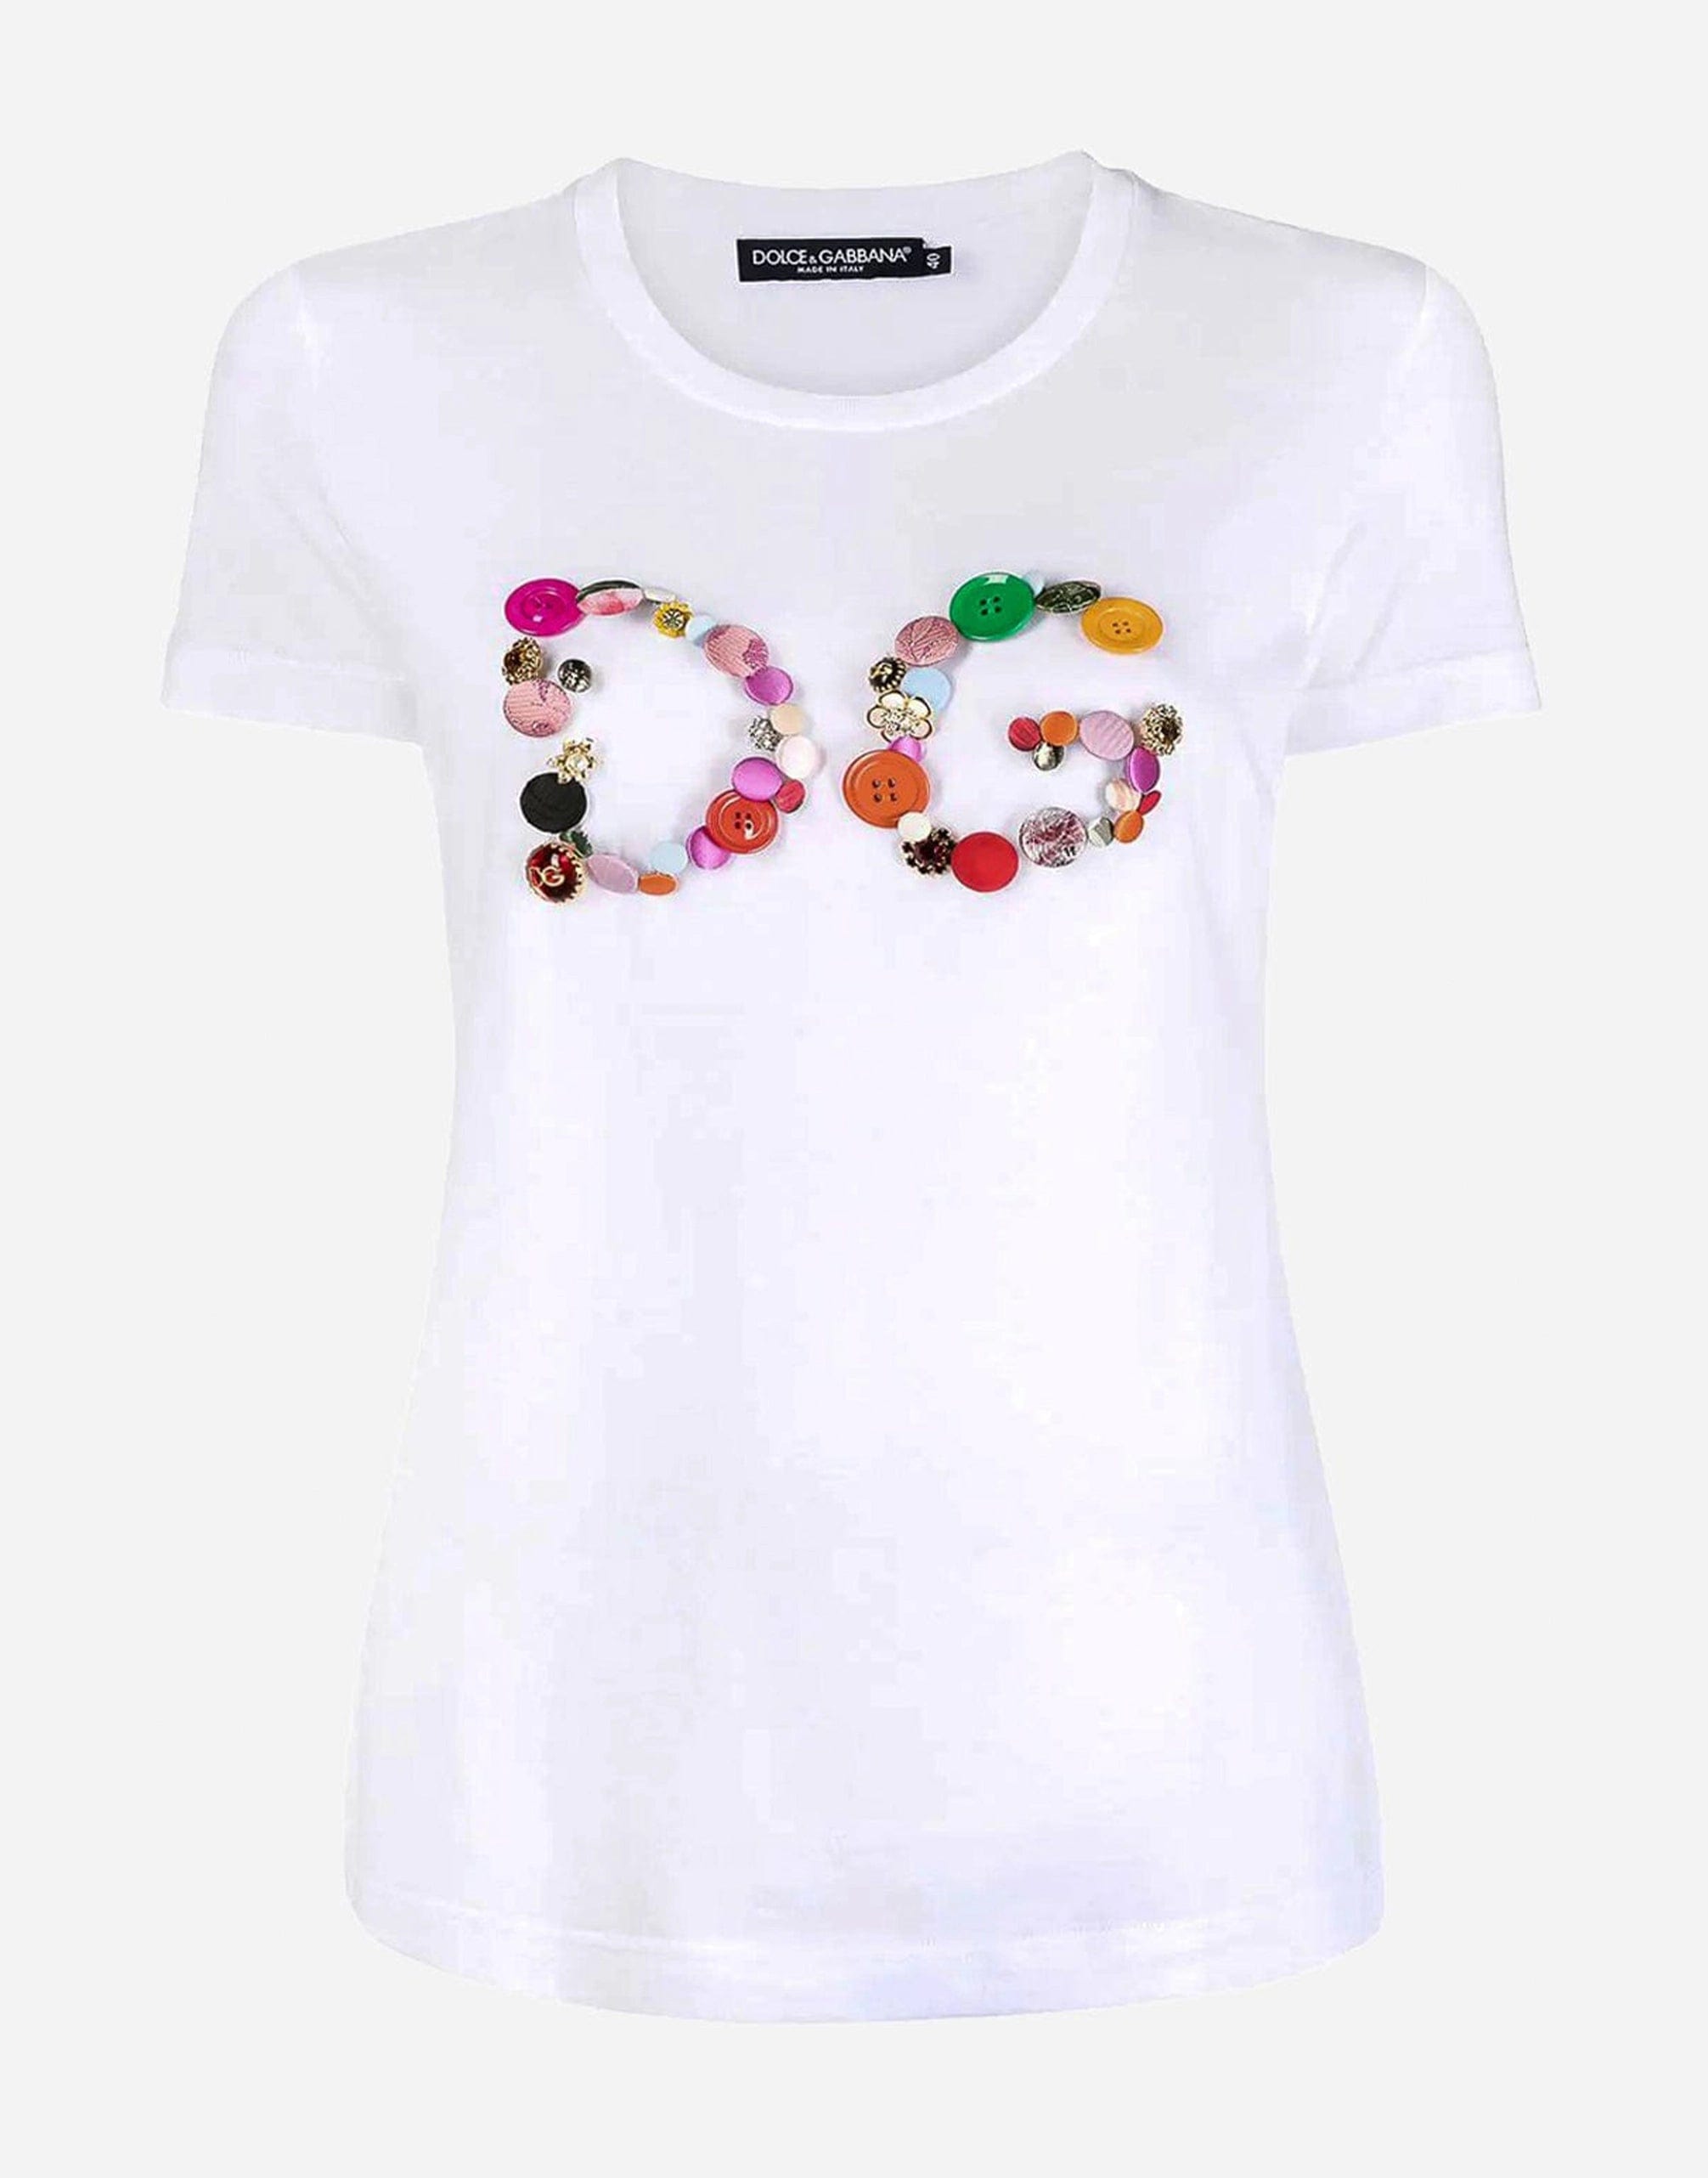 Dolce & Gabbana Button Appliqued T-Shirt